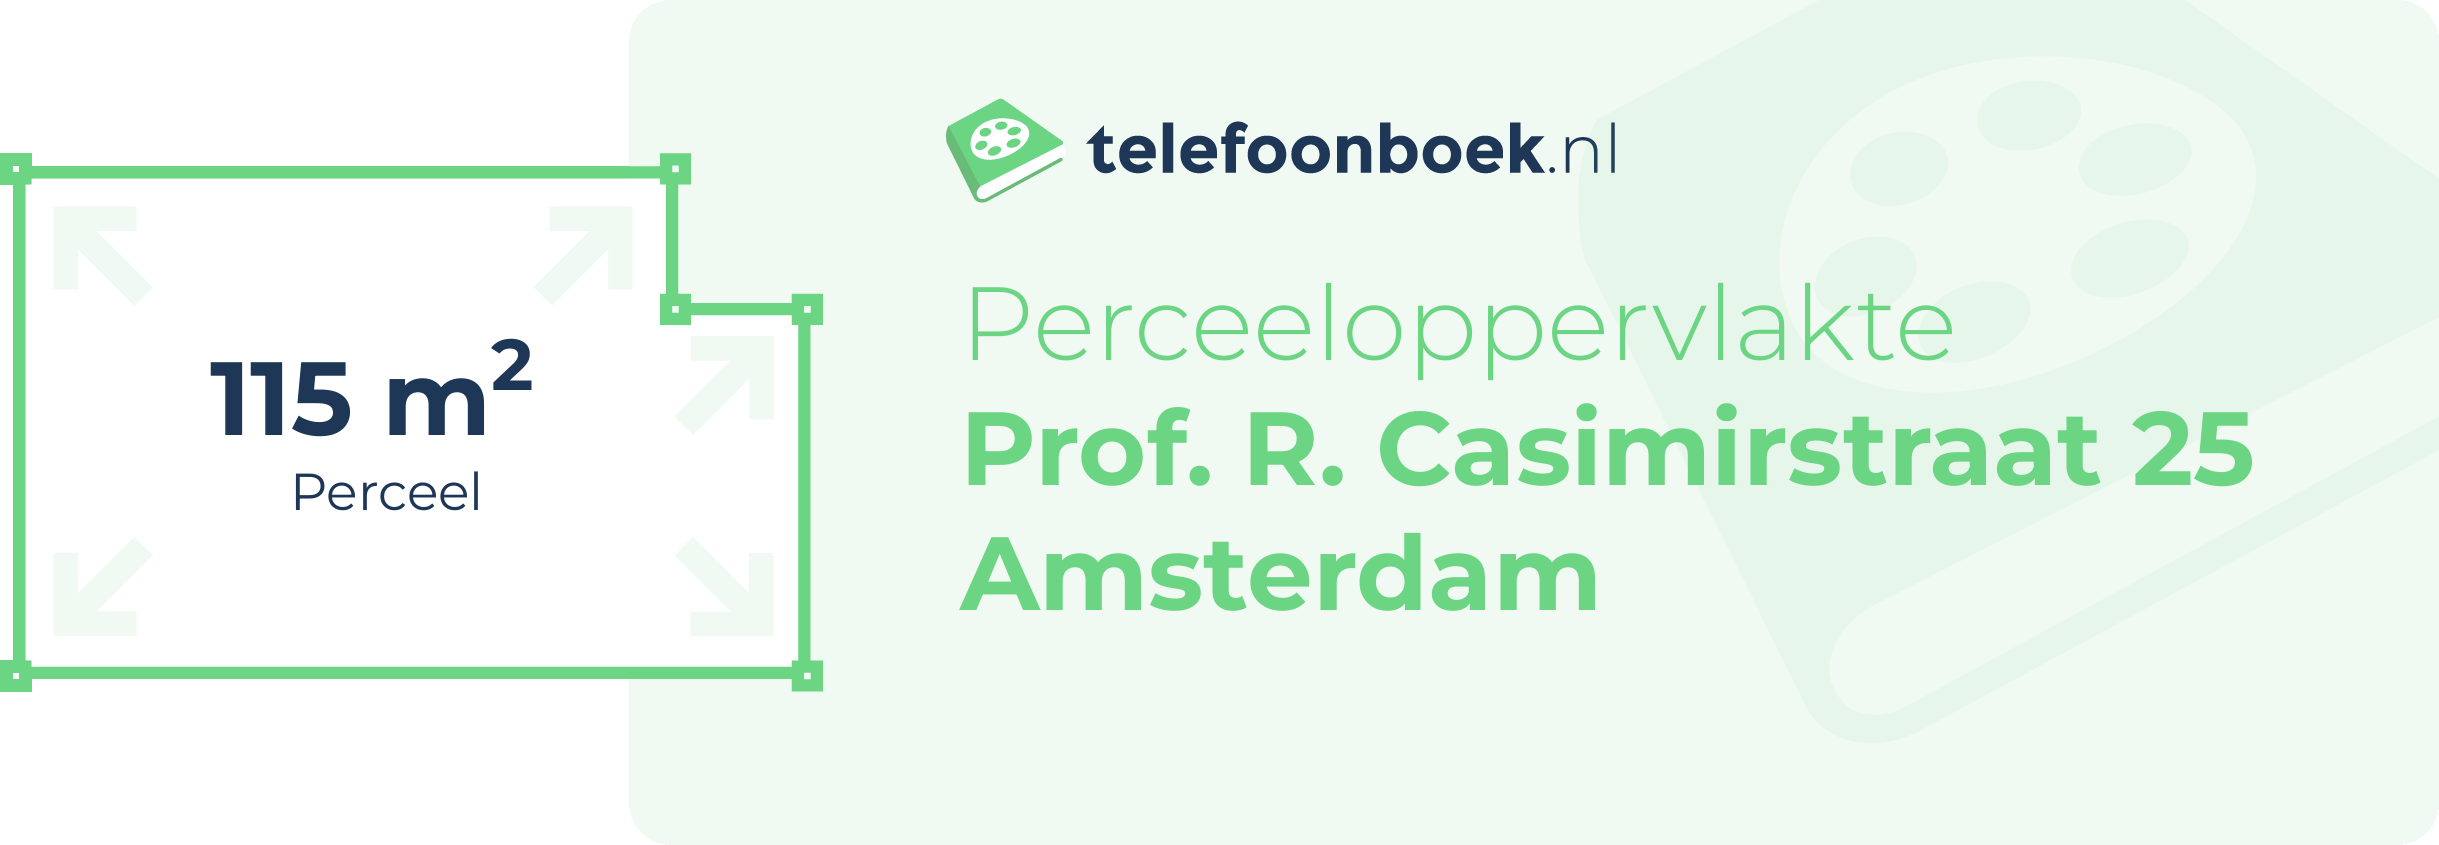 Perceeloppervlakte Prof. R. Casimirstraat 25 Amsterdam